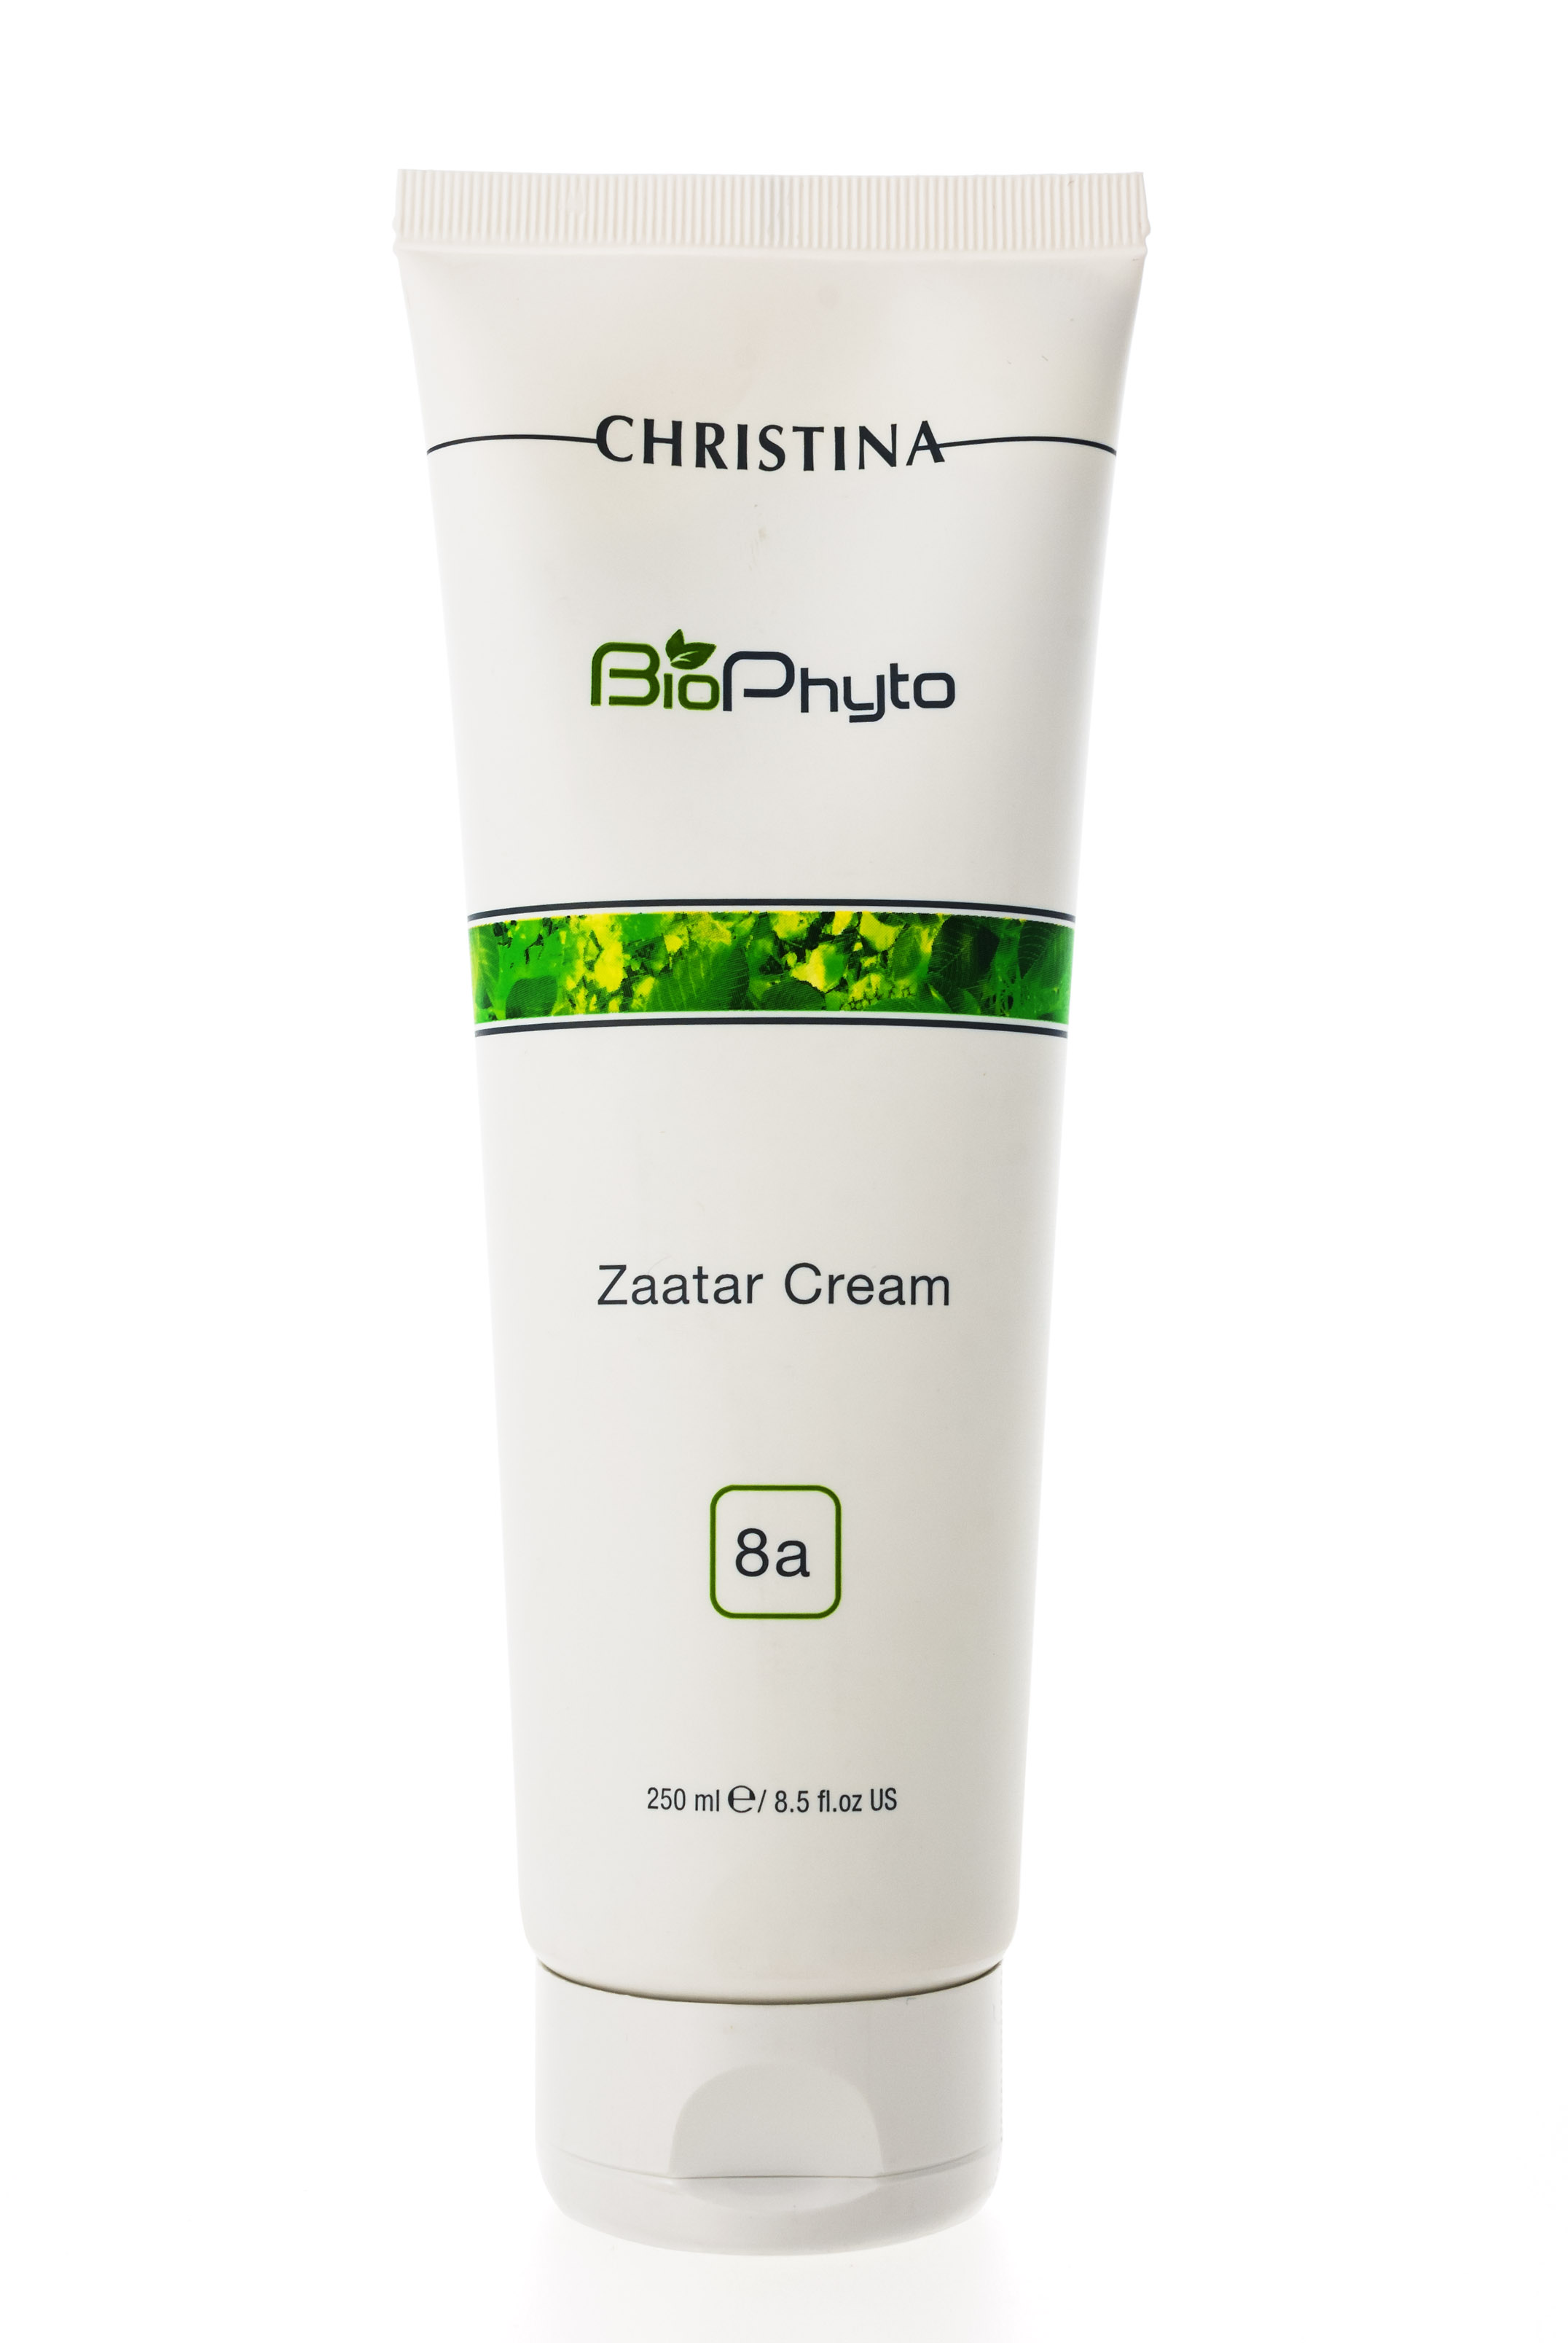 Christina Bio Phyto Zaatar Cream Крем «Заатар» (шаг 8a) 250 